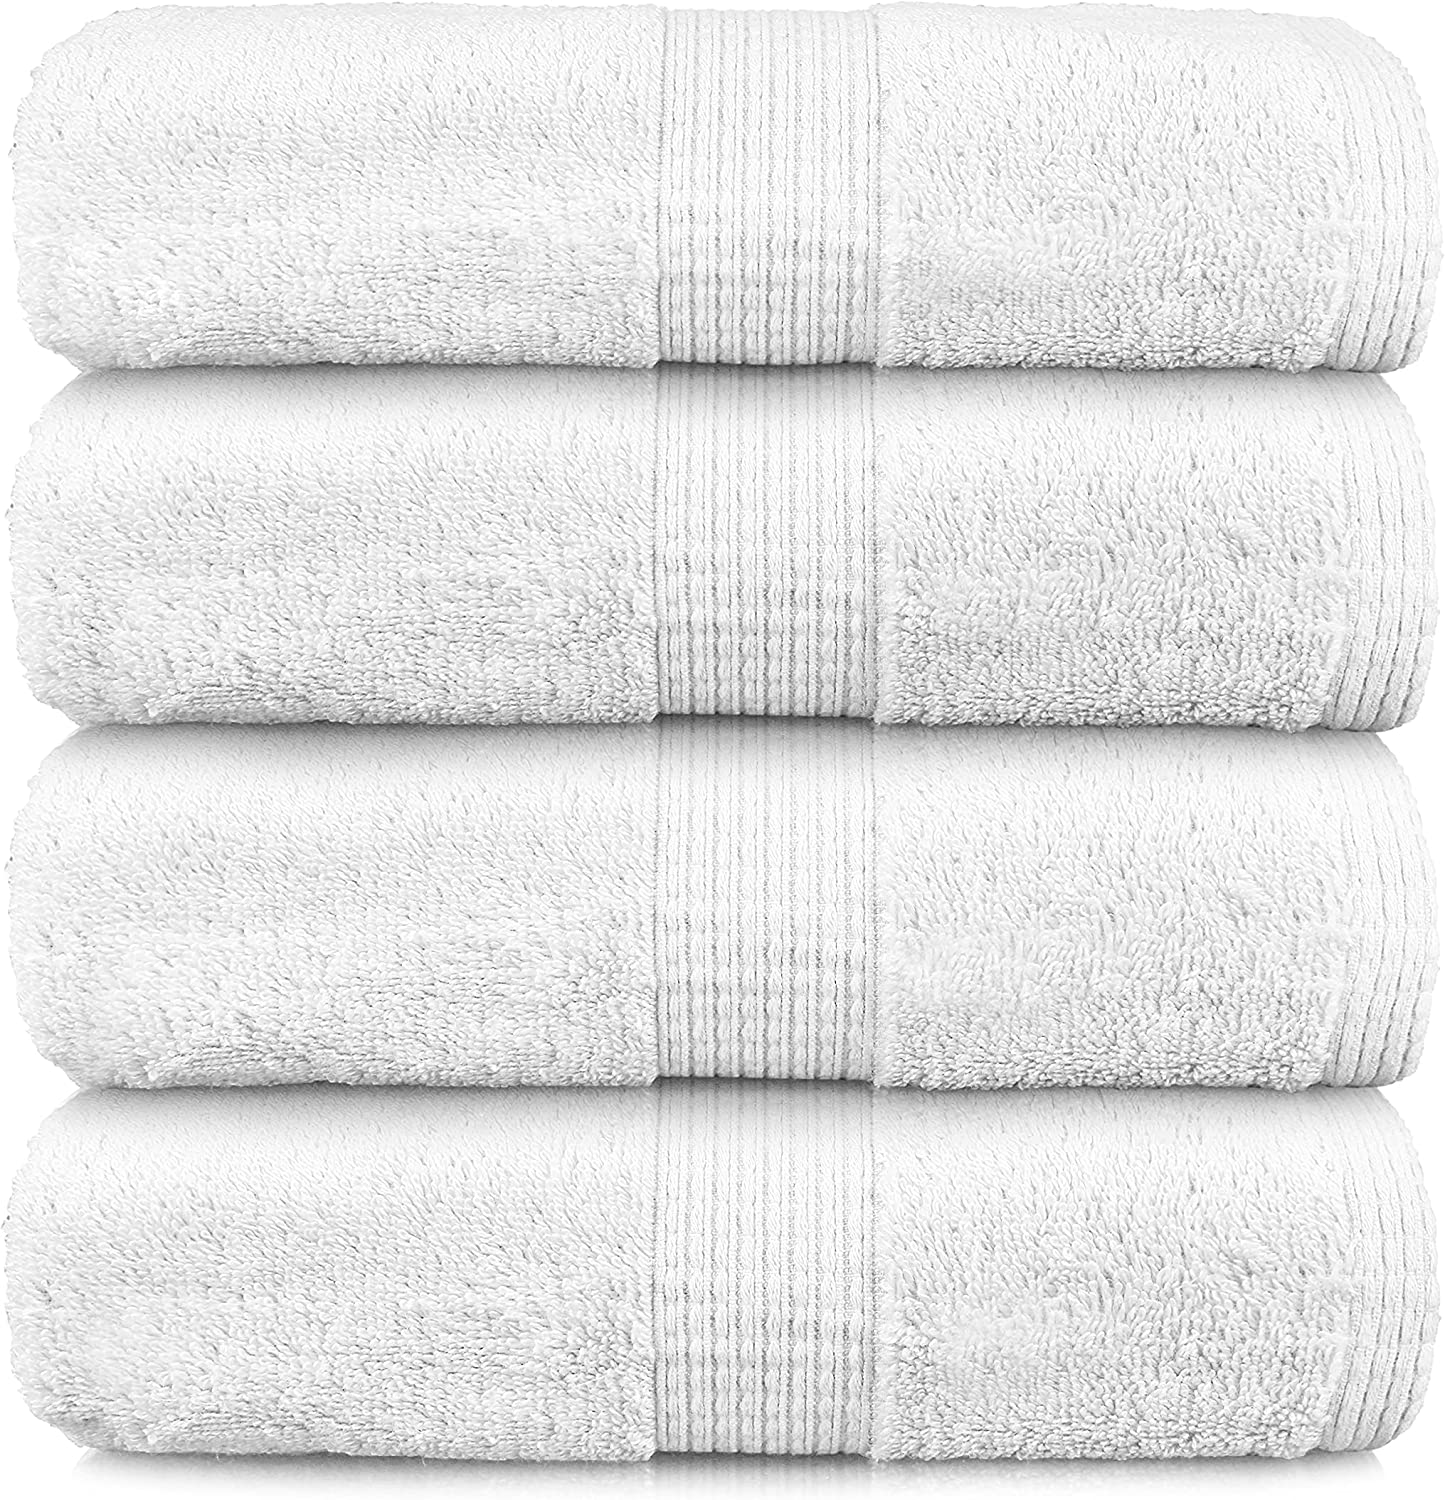 Bath Sheets Bathroom Towel Set- 4 Pack 100% Cotton Extra Large